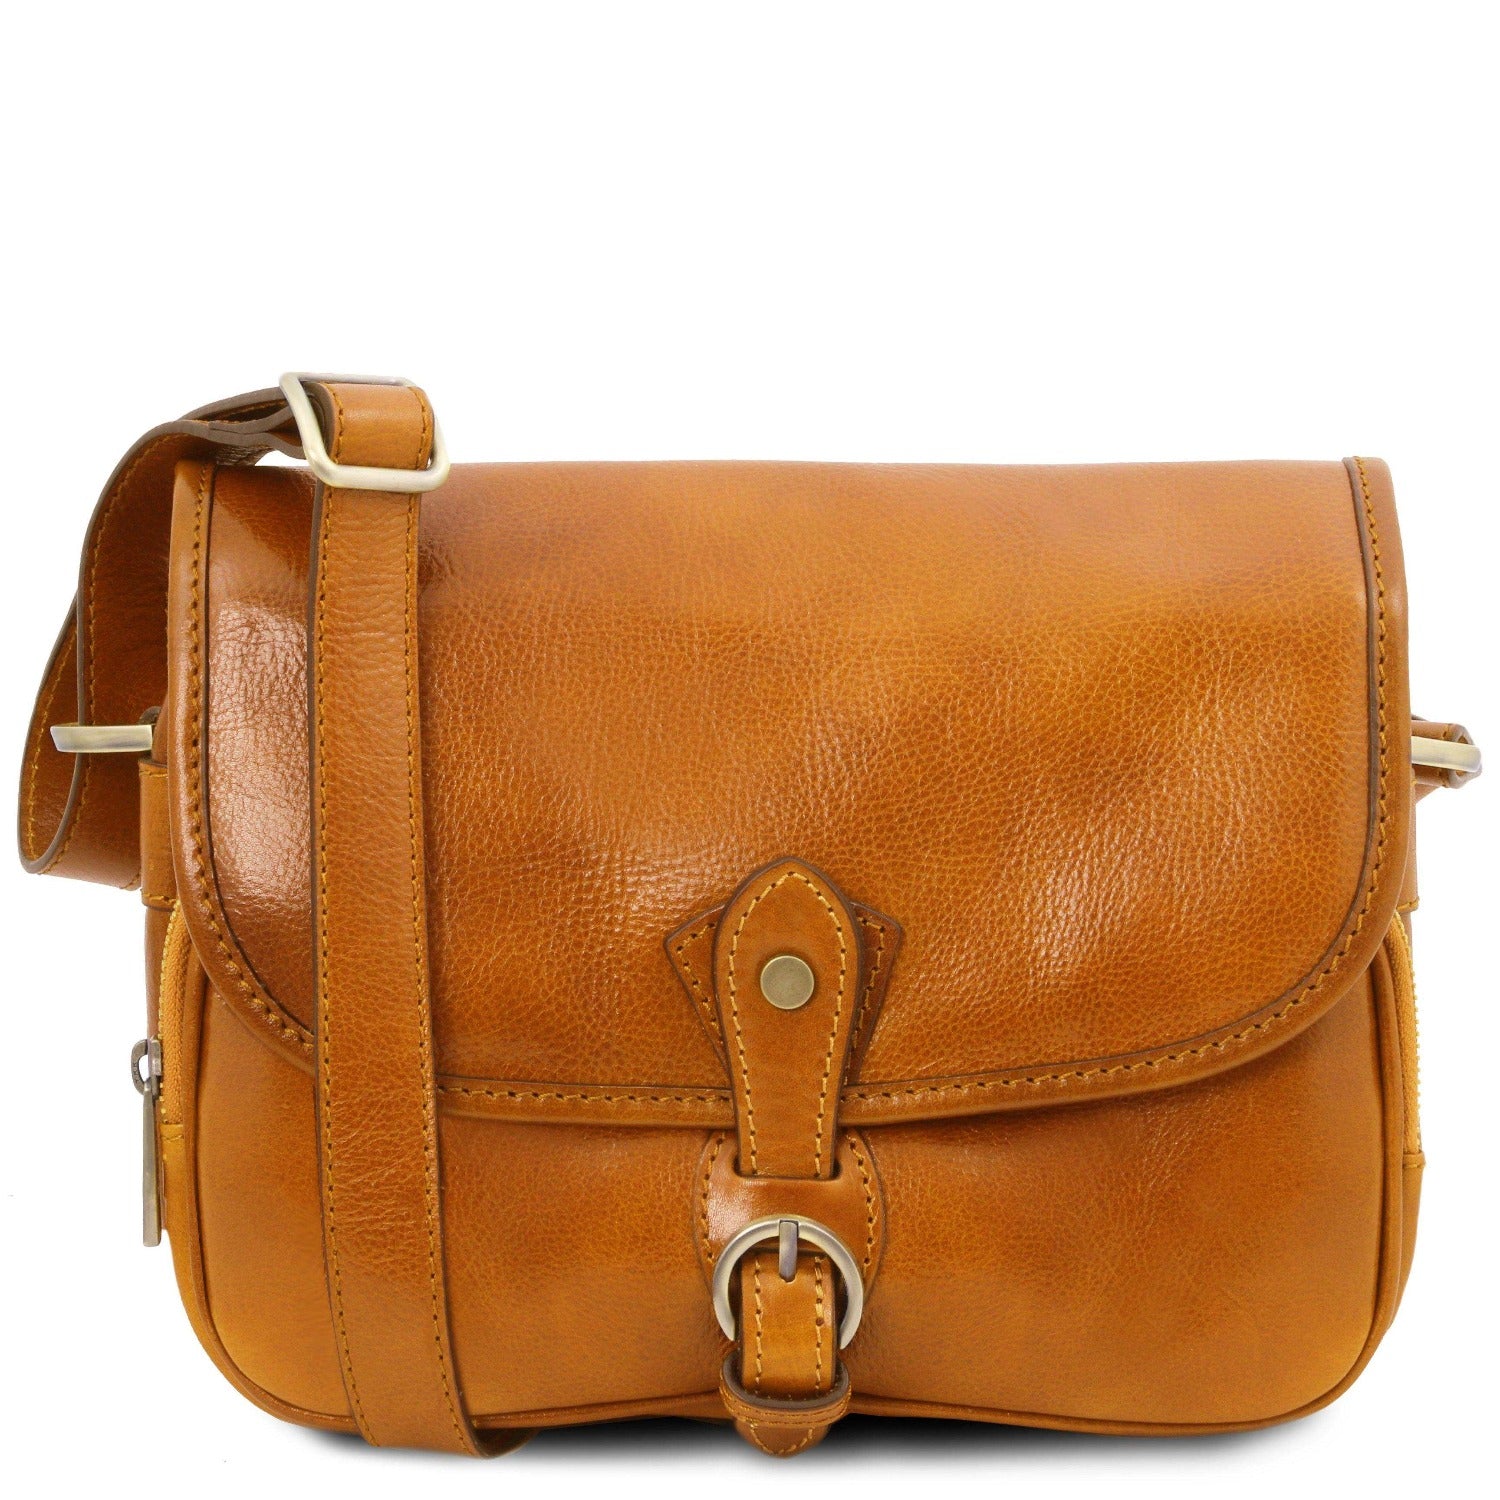 Alessia - Leather shoulder bag | TL142020 - Premium Leather shoulder bags - Shop now at San Rocco Italia